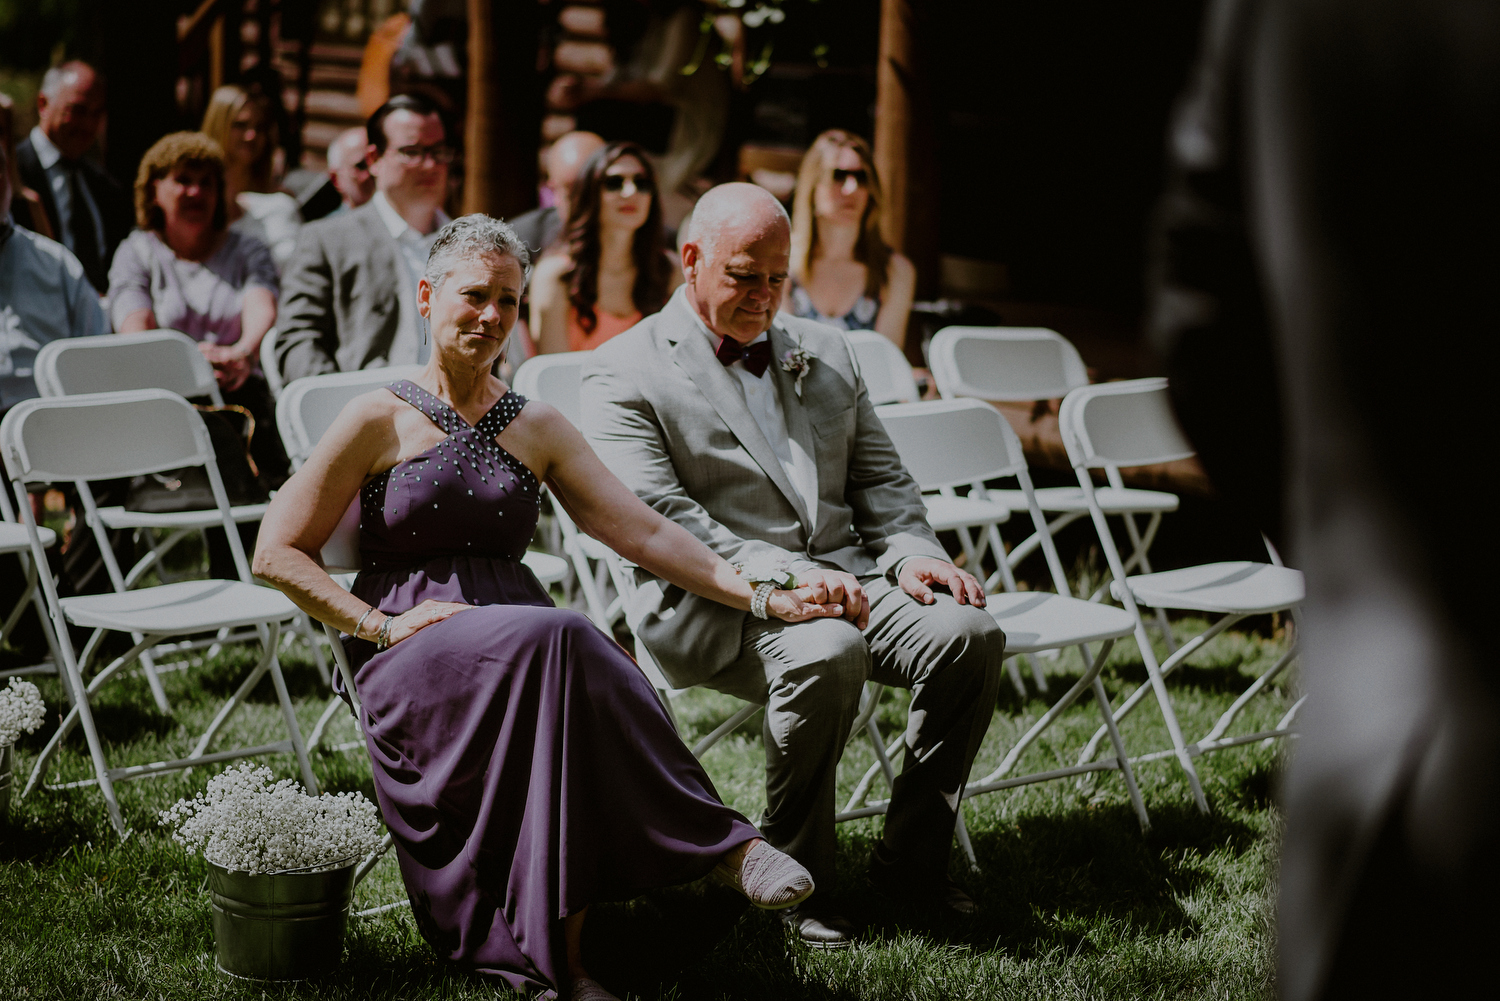 candid wedding photography moments during backyard wedding ceremony